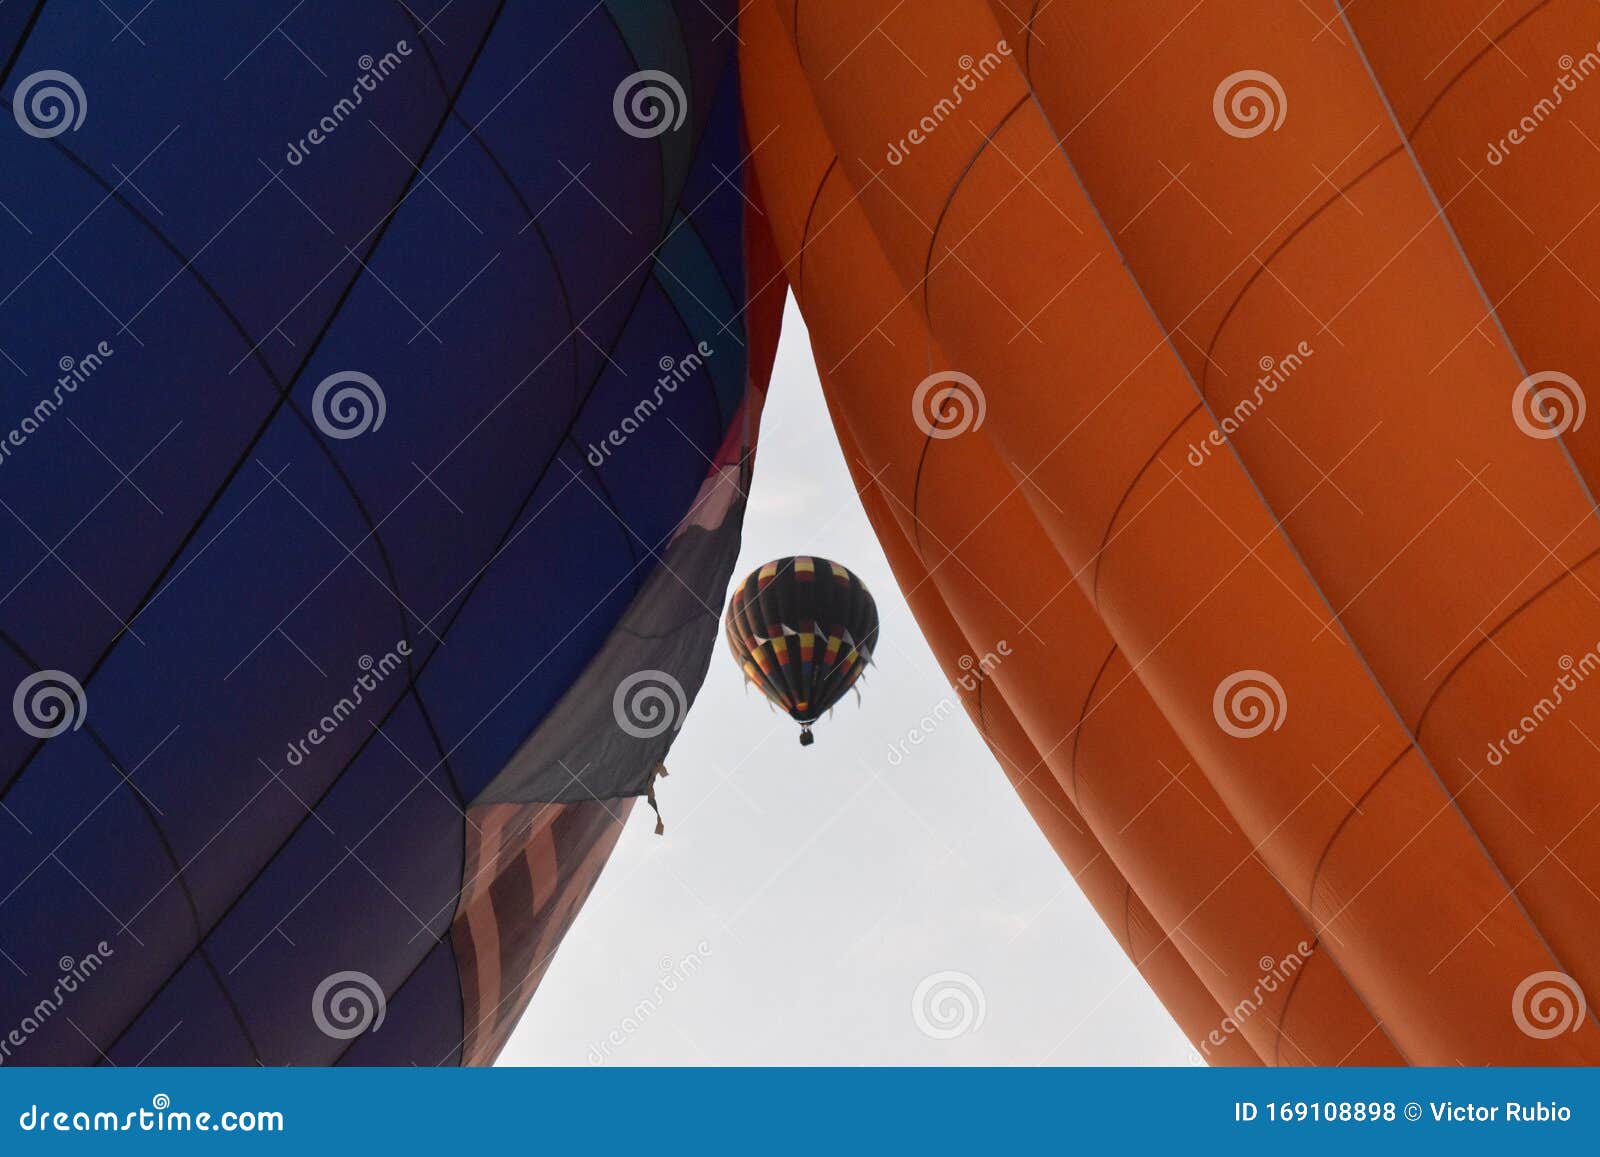 hot air balloon beteewn two ballooms